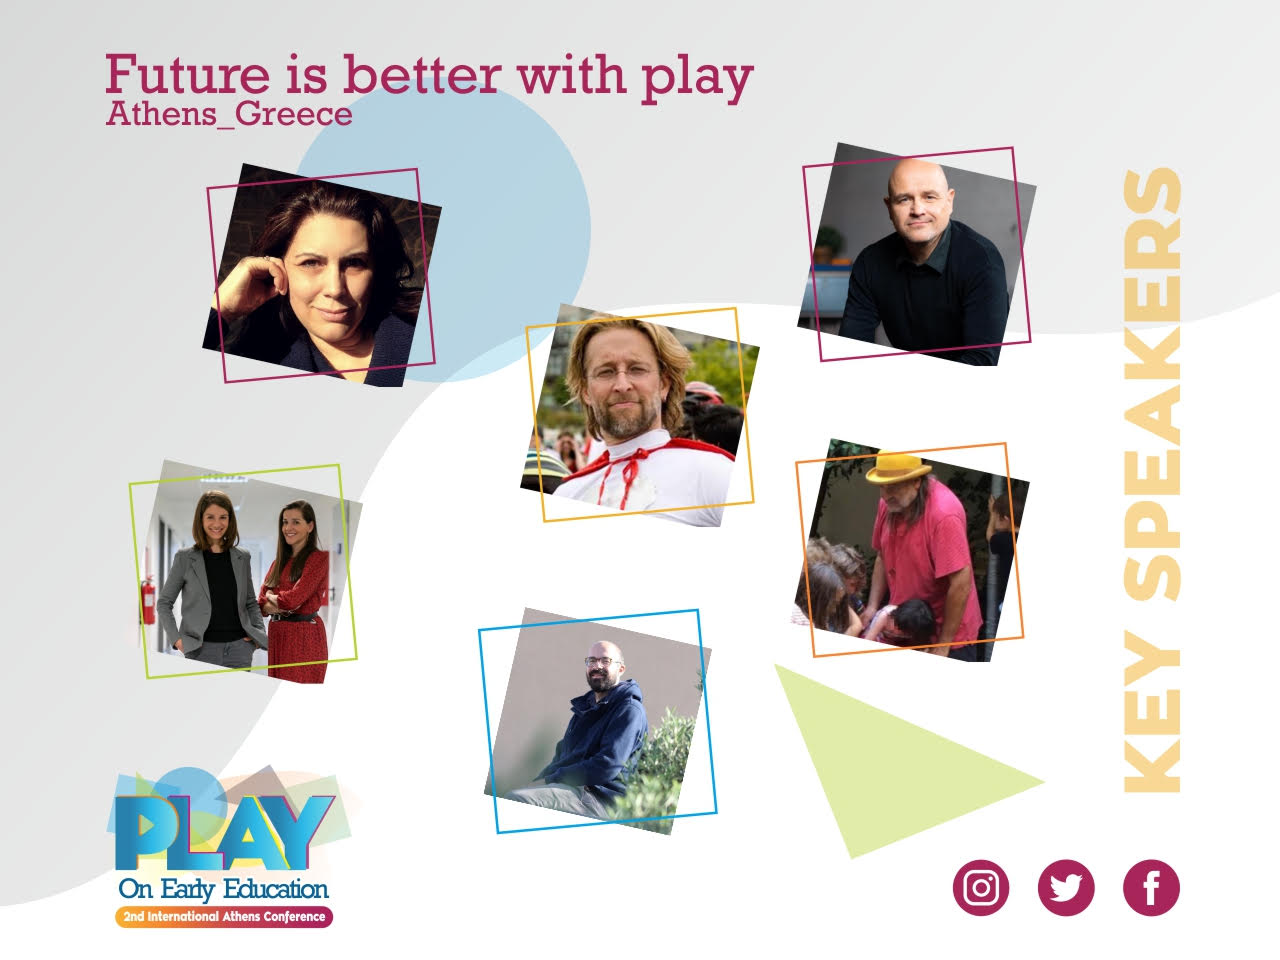 "Play on Early Education": Ένα Συνέδριο αφιερωμένο στο παιχνίδι